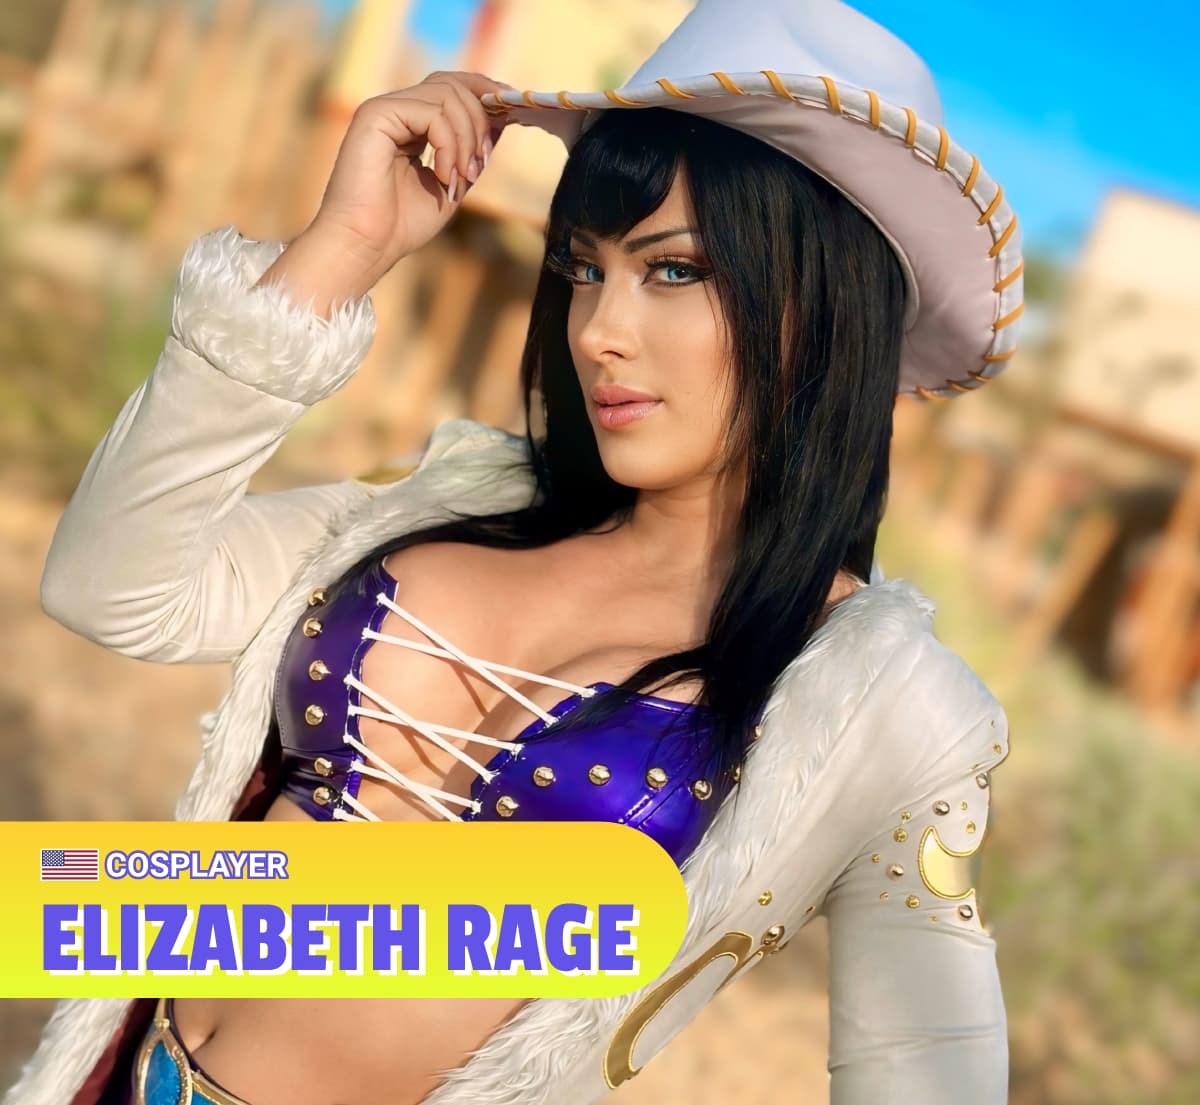 Elizabeth Rage - Cosplayer